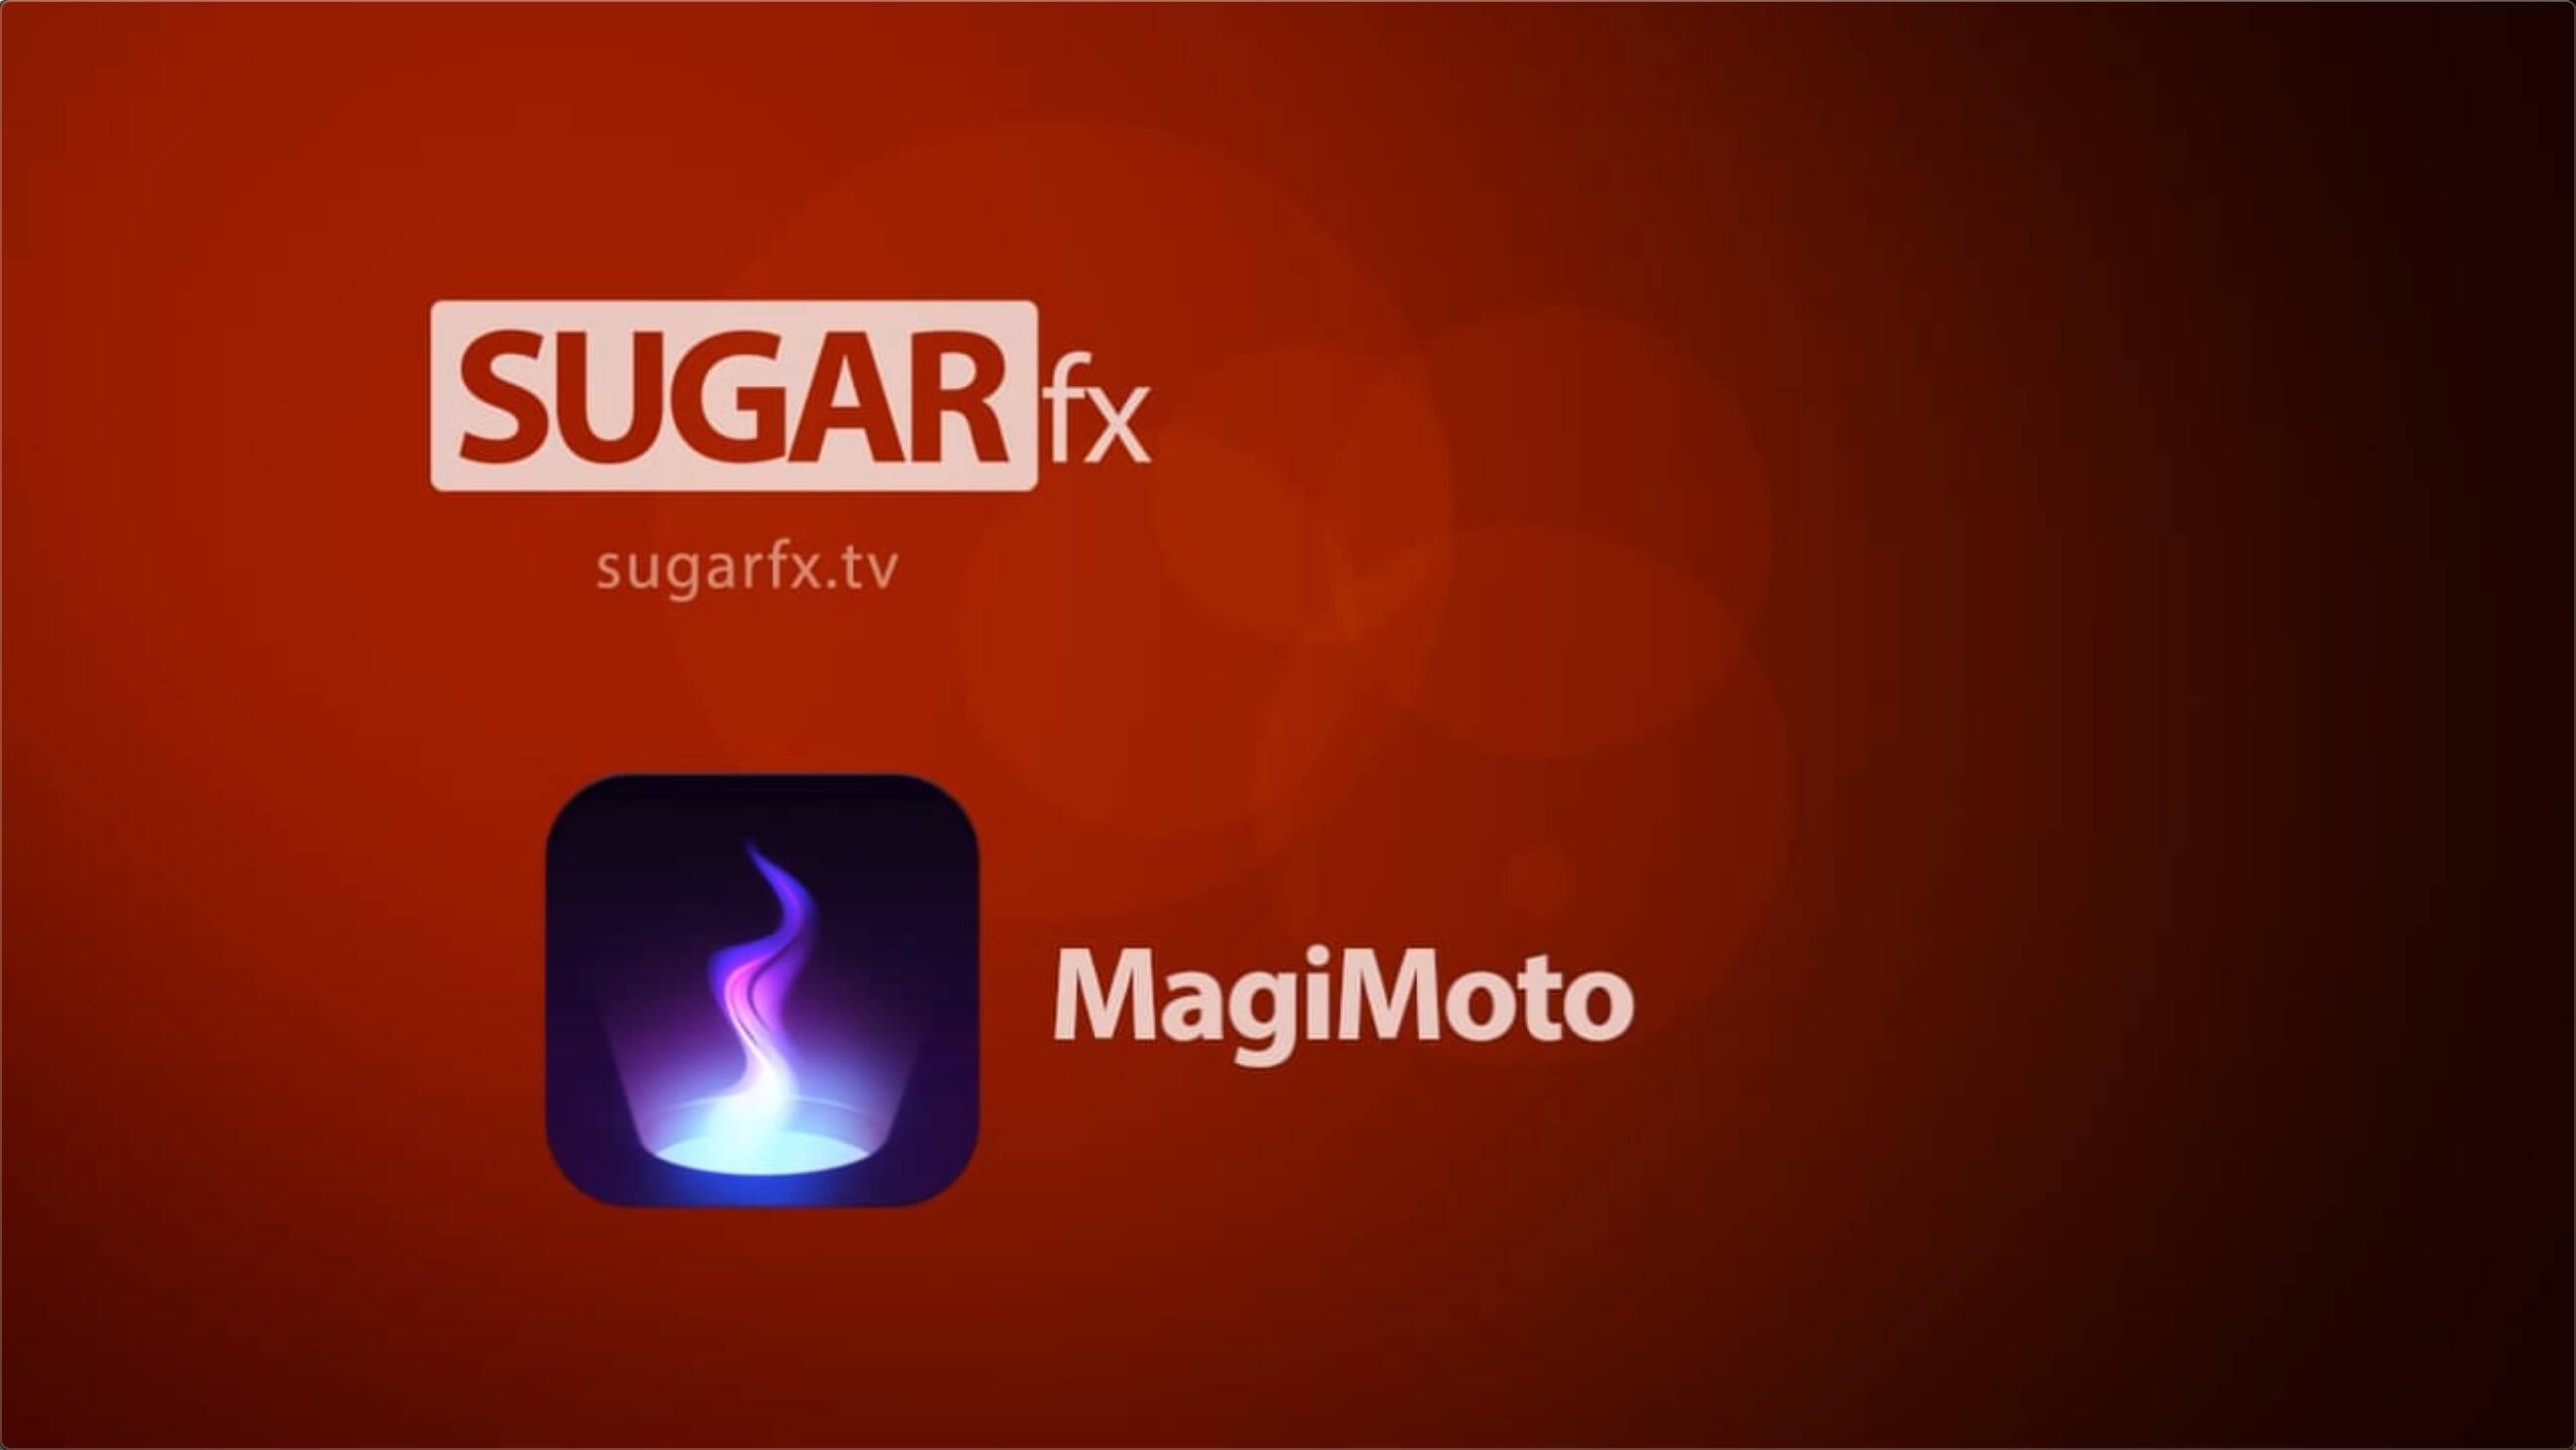 FCPX插件:快速过渡标题集 SUGARfx MagiMoto